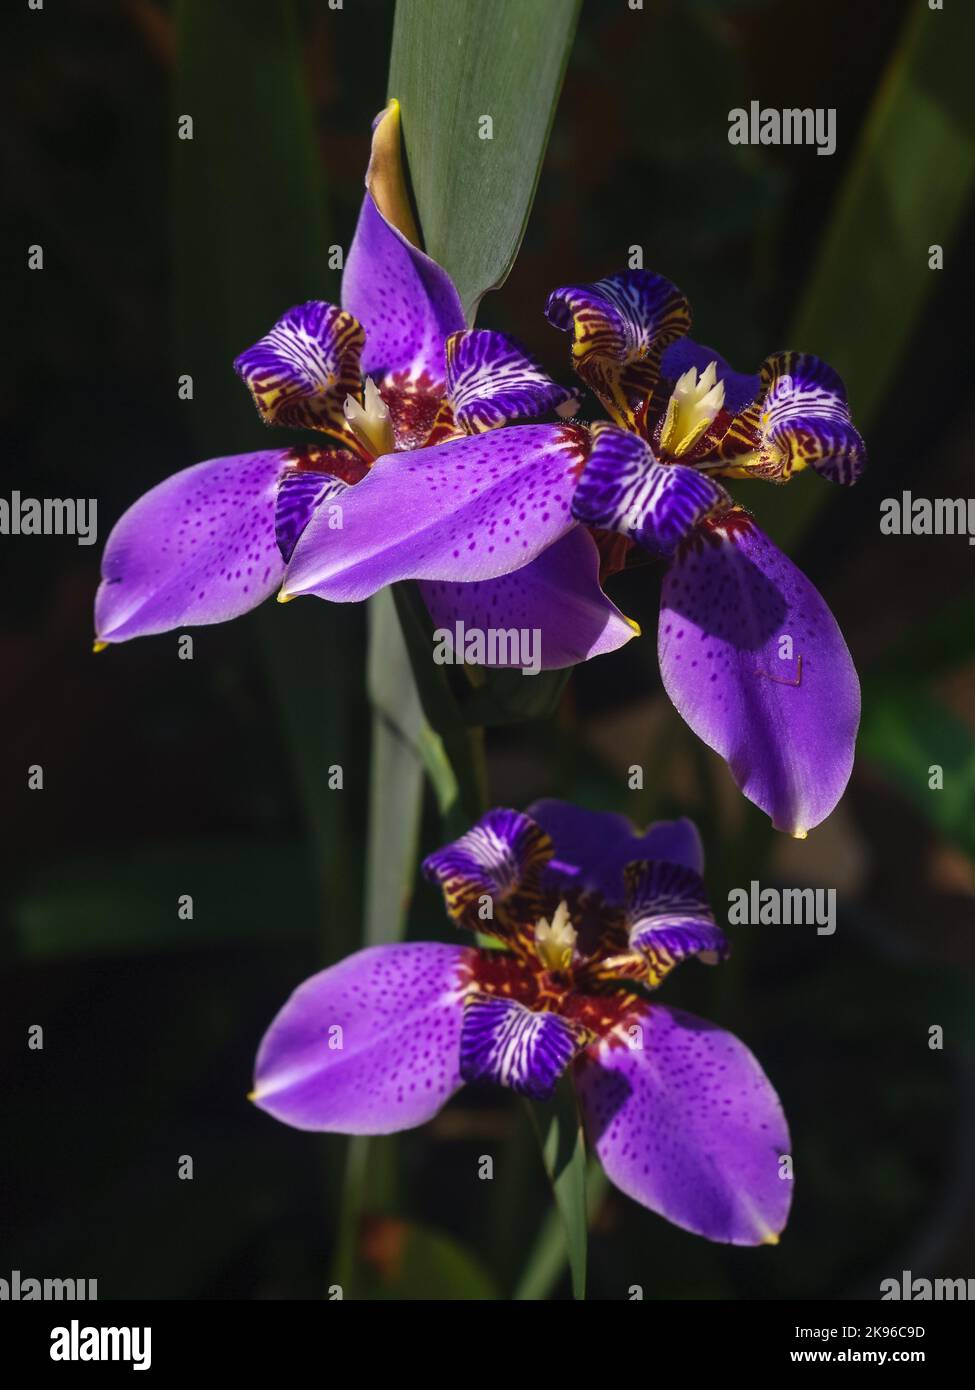 Closeup view of neomarica caerulea aka apostle's iris or walking iris purple blue flowers isolated outdoors in sunlight on dark background Stock Photo